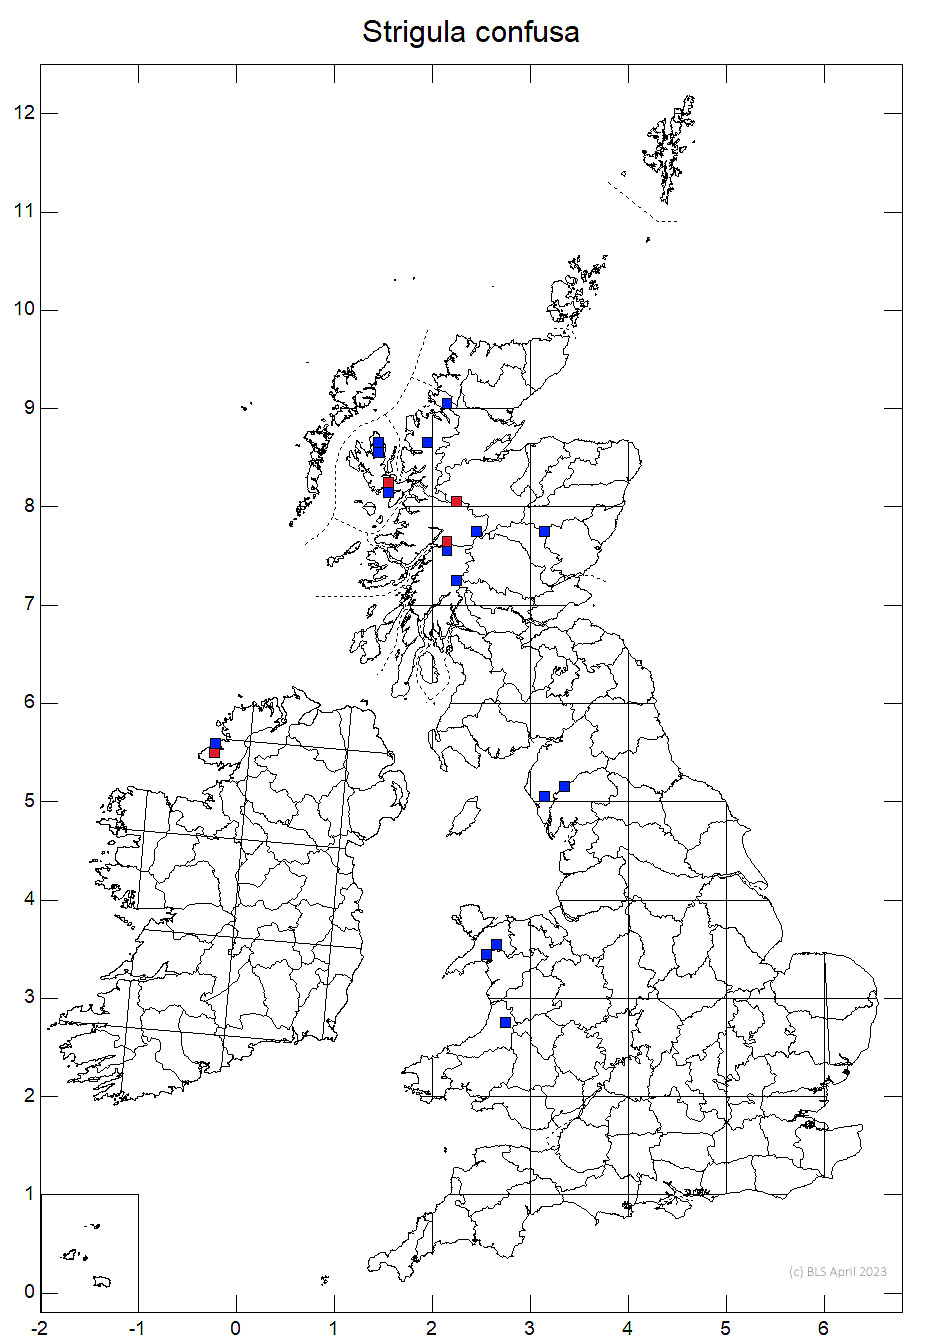 Strigula confusa 10km sq distribution map